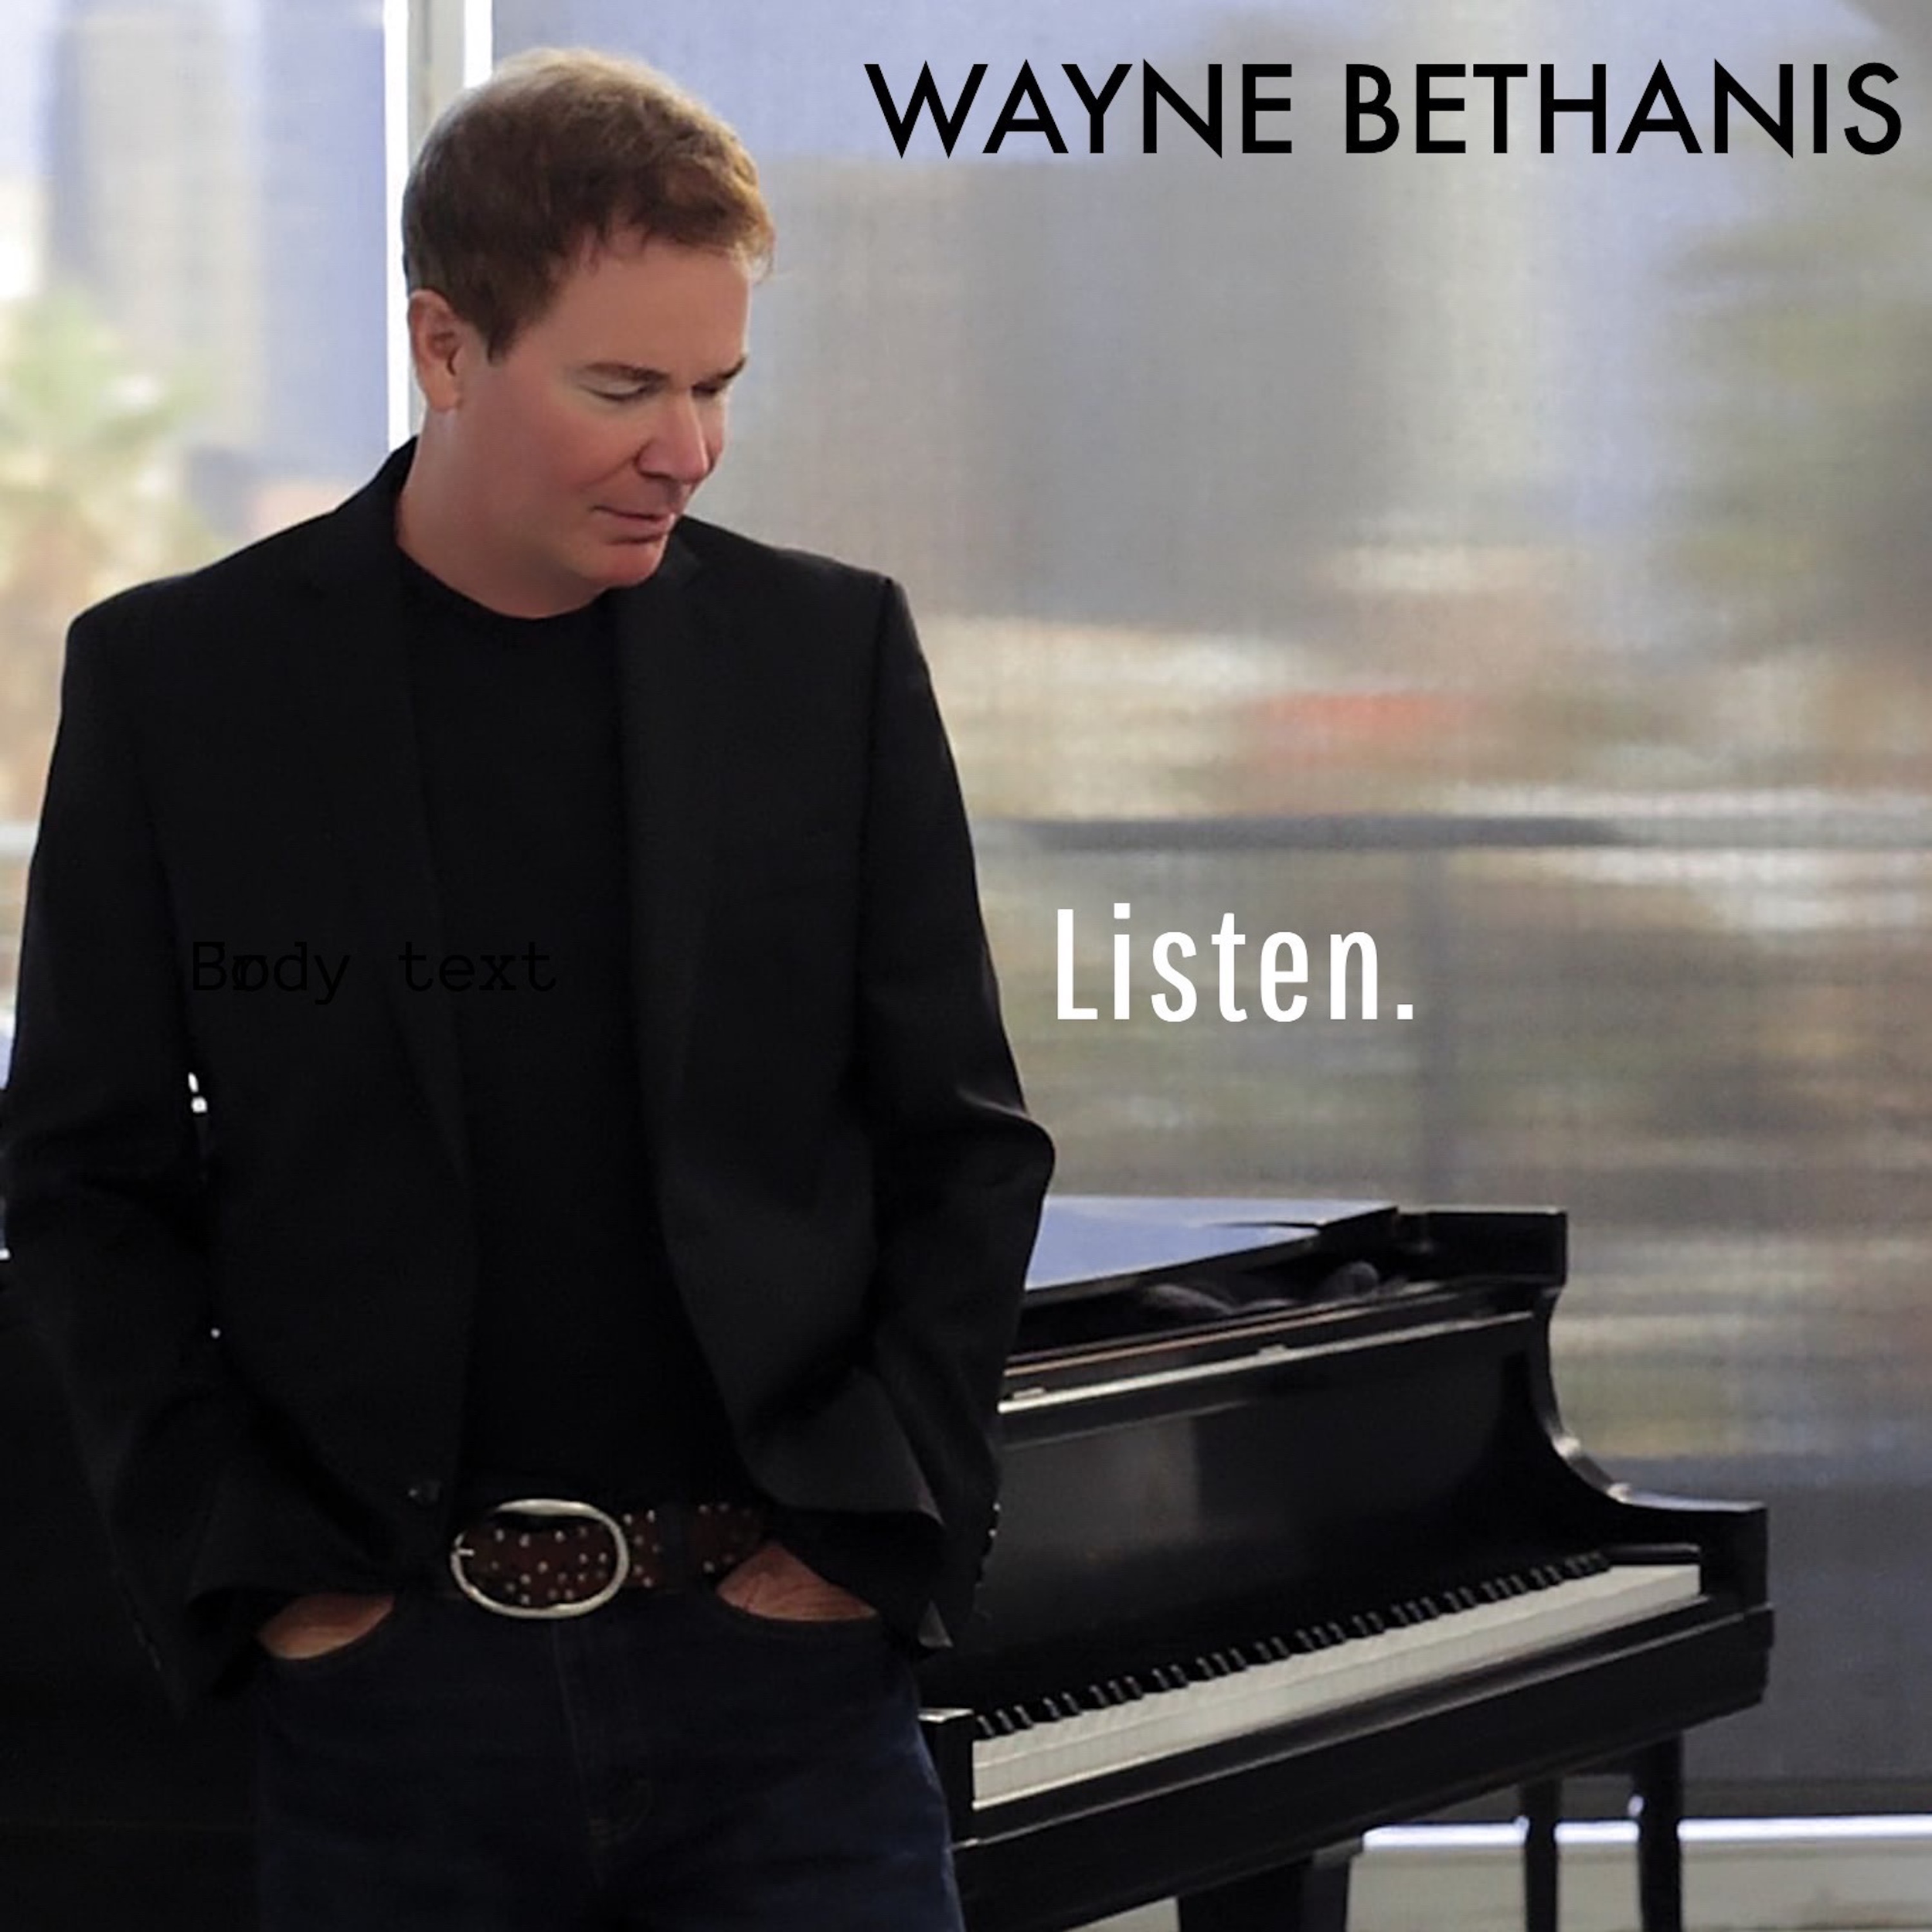 Wayne Bethanis